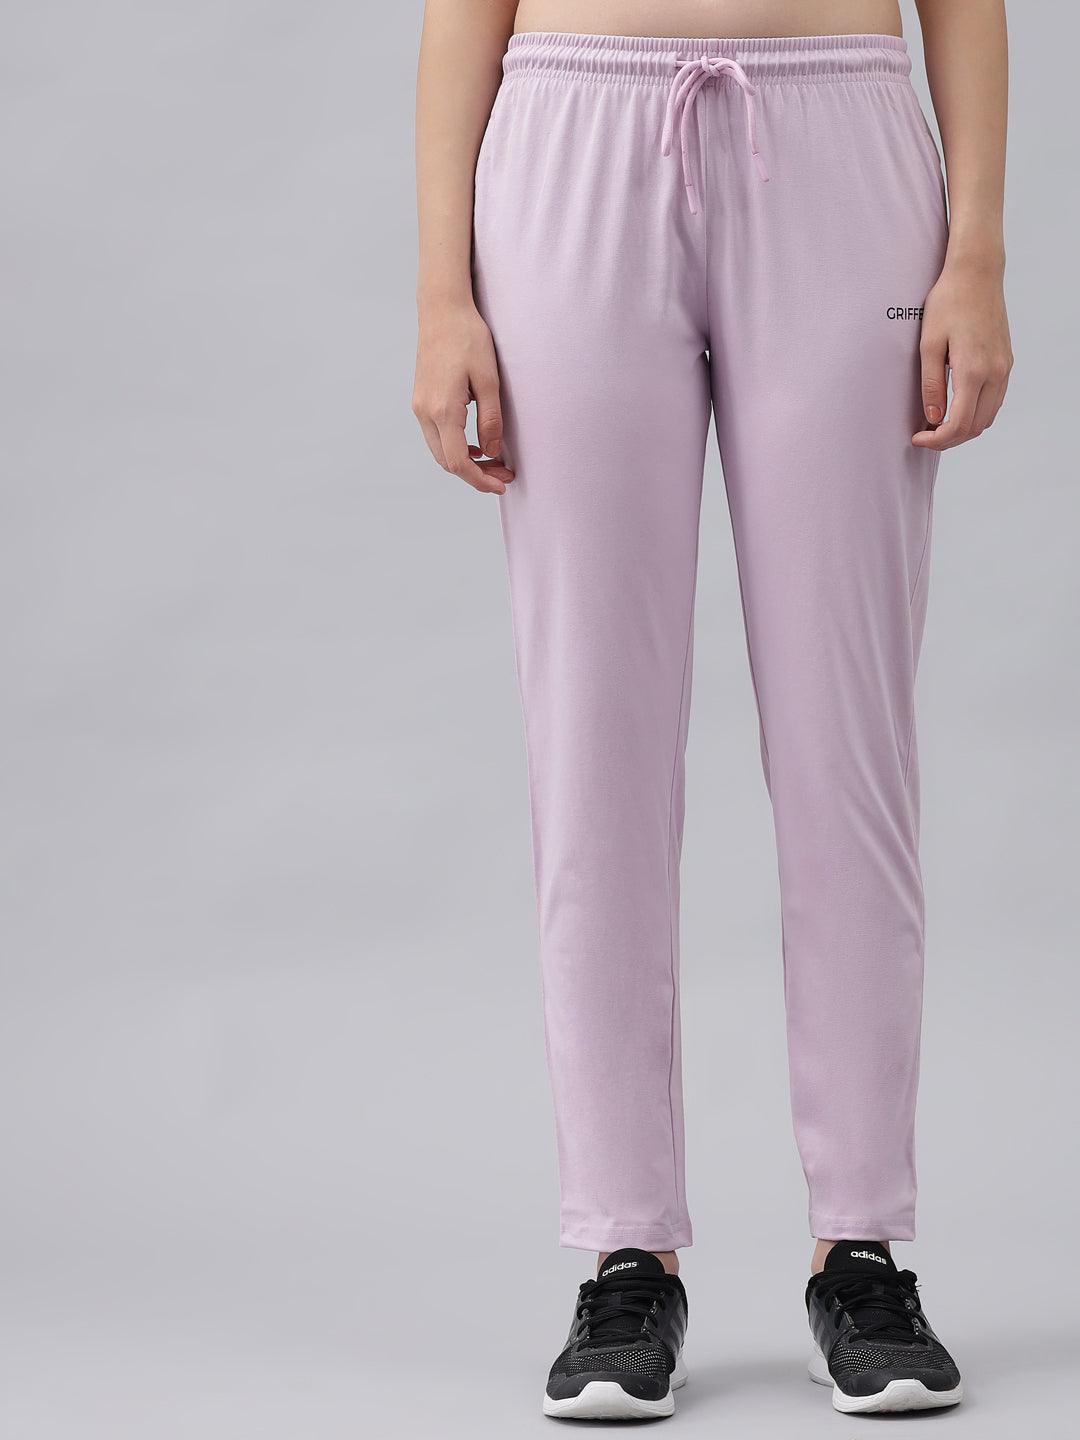 GRIFFEL Women Basic Solid Regular Fit Light Purple Trackpant - griffel